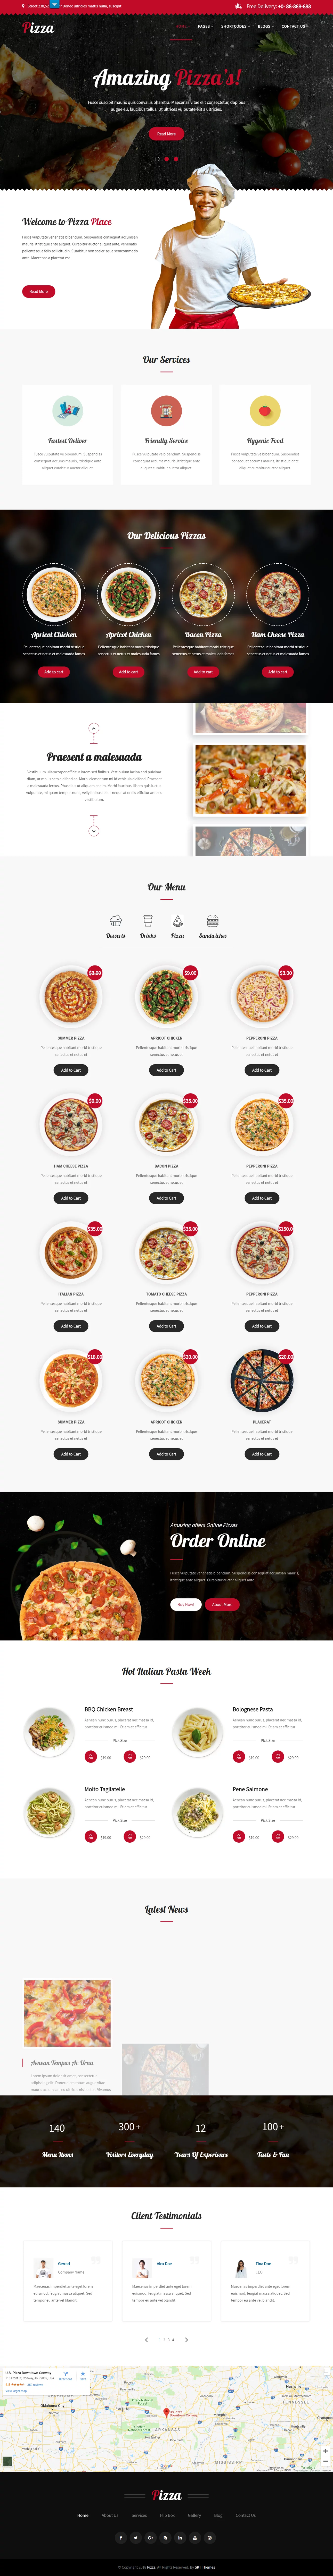 Pizza Lite - Best Free Bar and Pub WordPress Theme